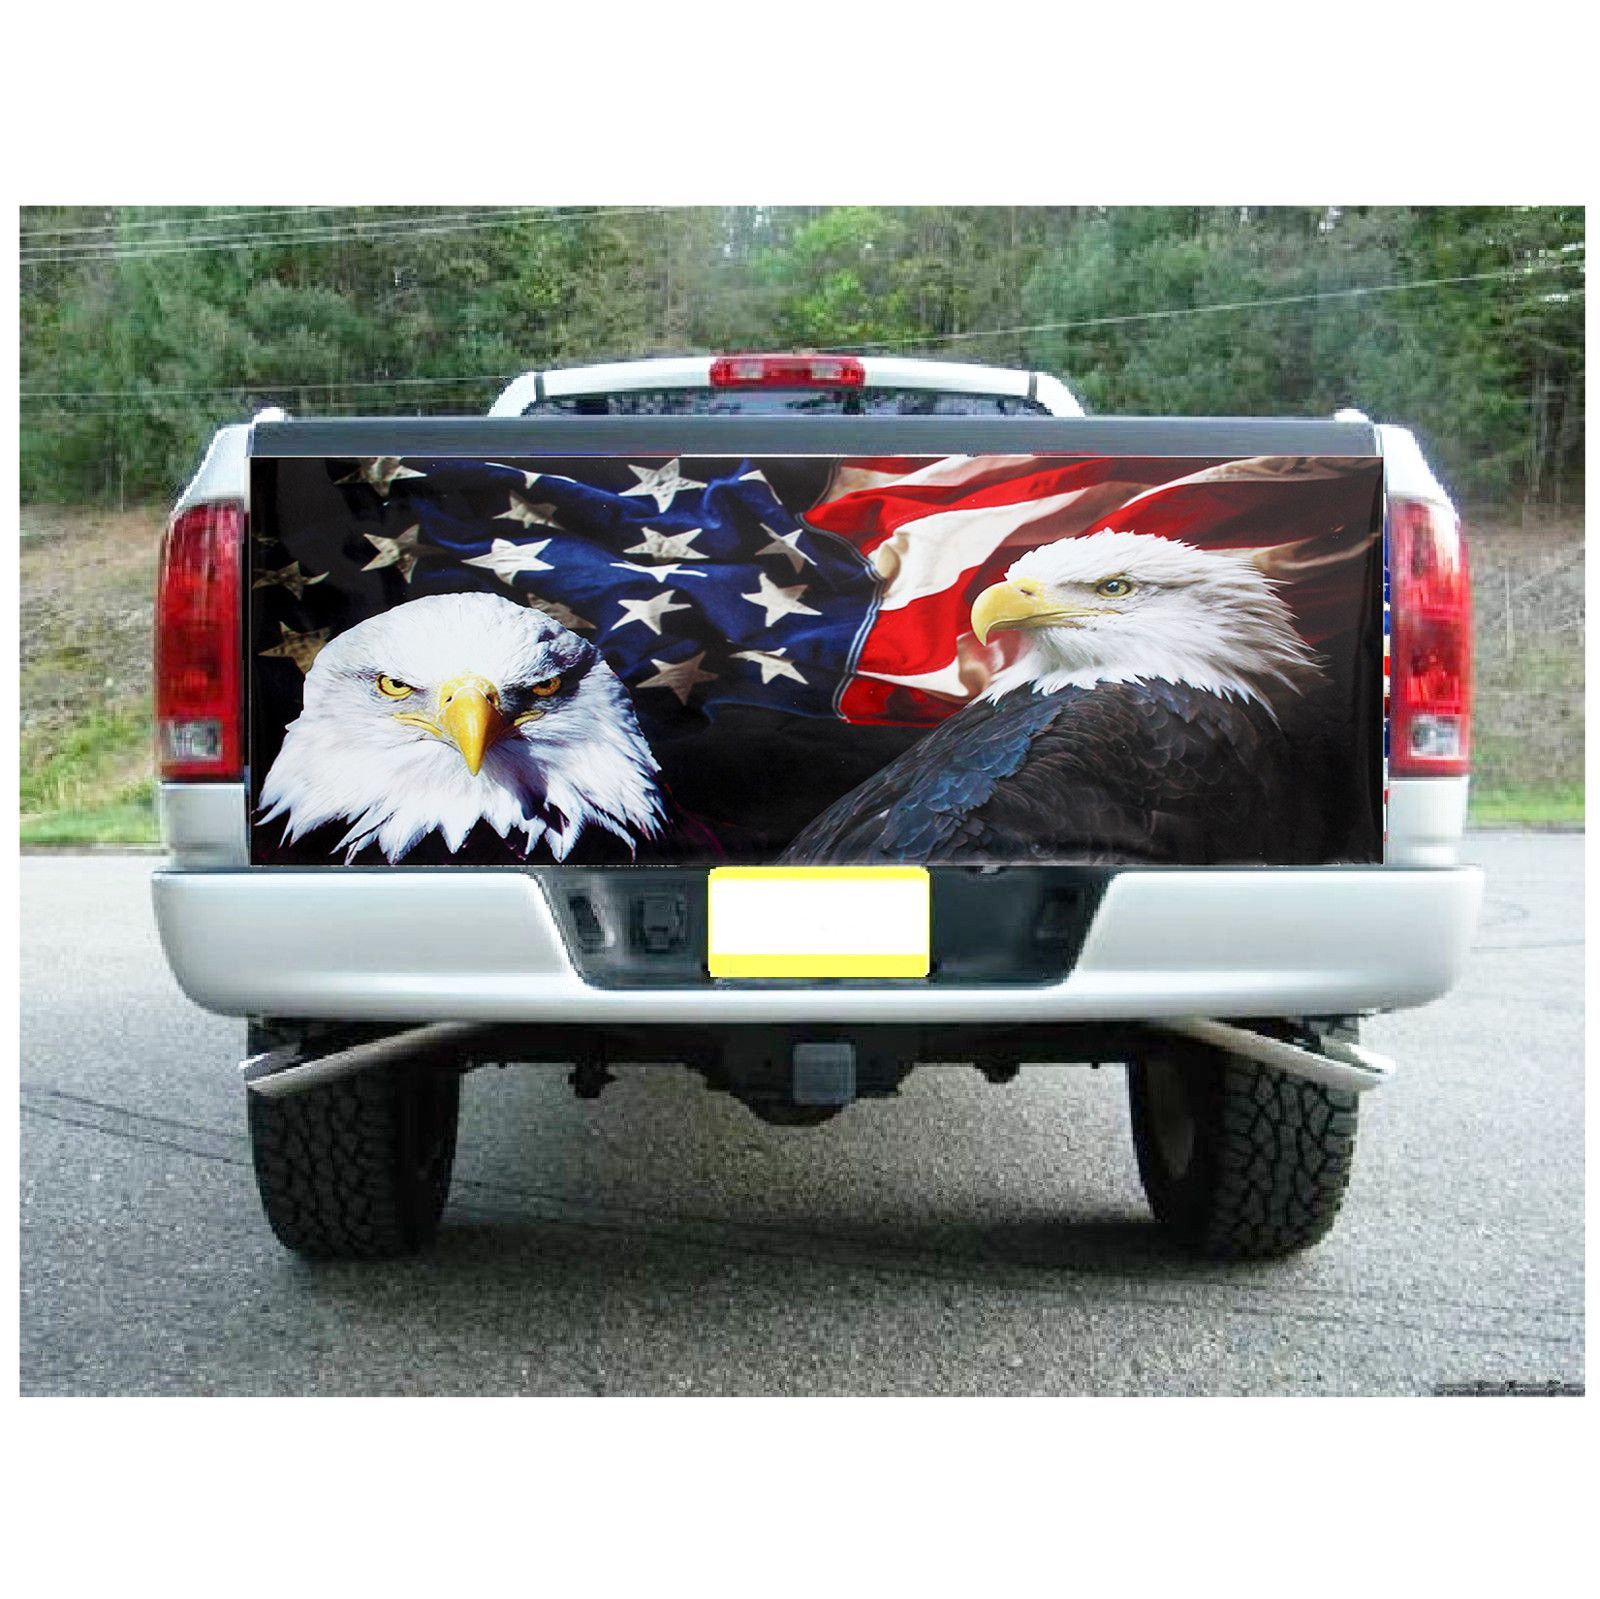 167x635cm-T40-Eagle-America-Flag-Tailgate-Wrap-Vinyl-Graphic-Car-Decal-Truck-Rear-Wrap-Car-Stickers-1469030